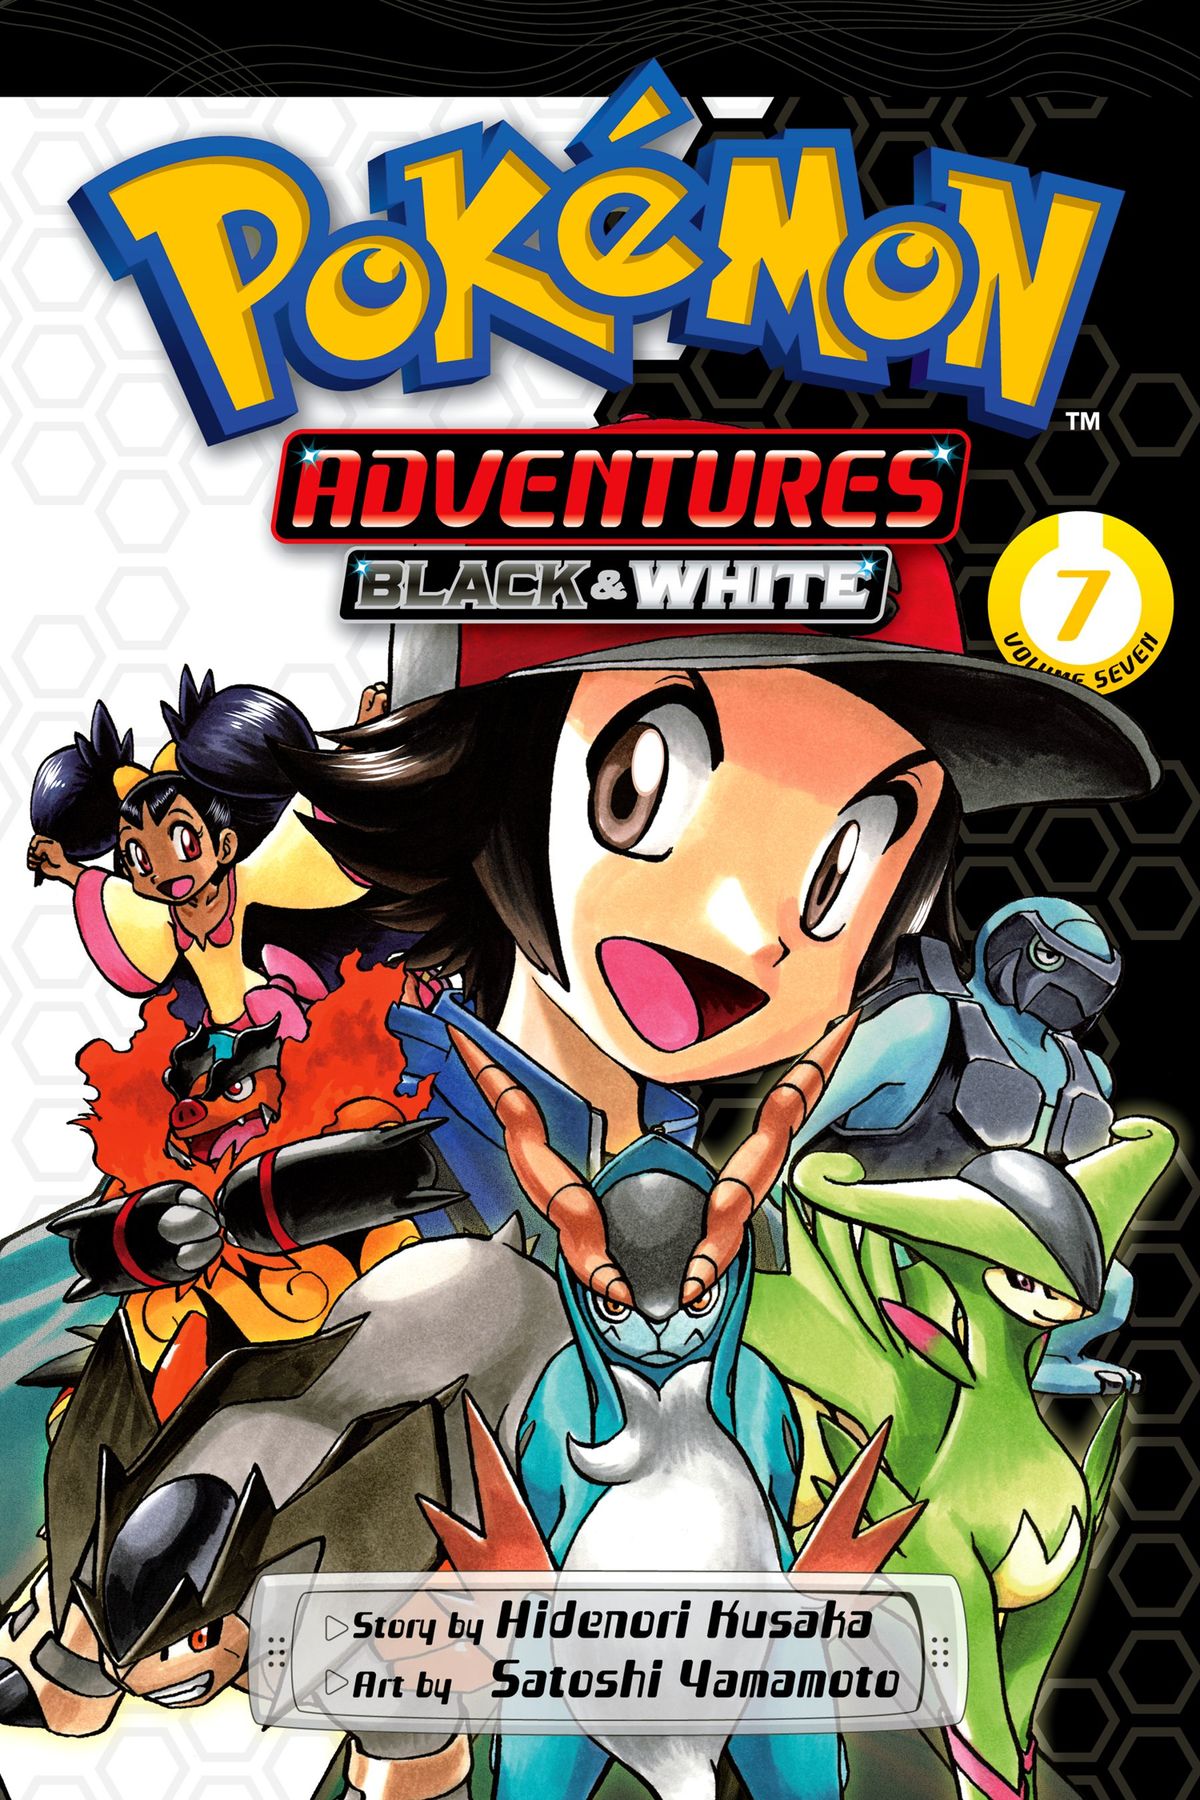 Pokémon: Sword & Shield, Vol. 7, Book by Hidenori Kusaka, Satoshi Yamamoto, Official Publisher Page